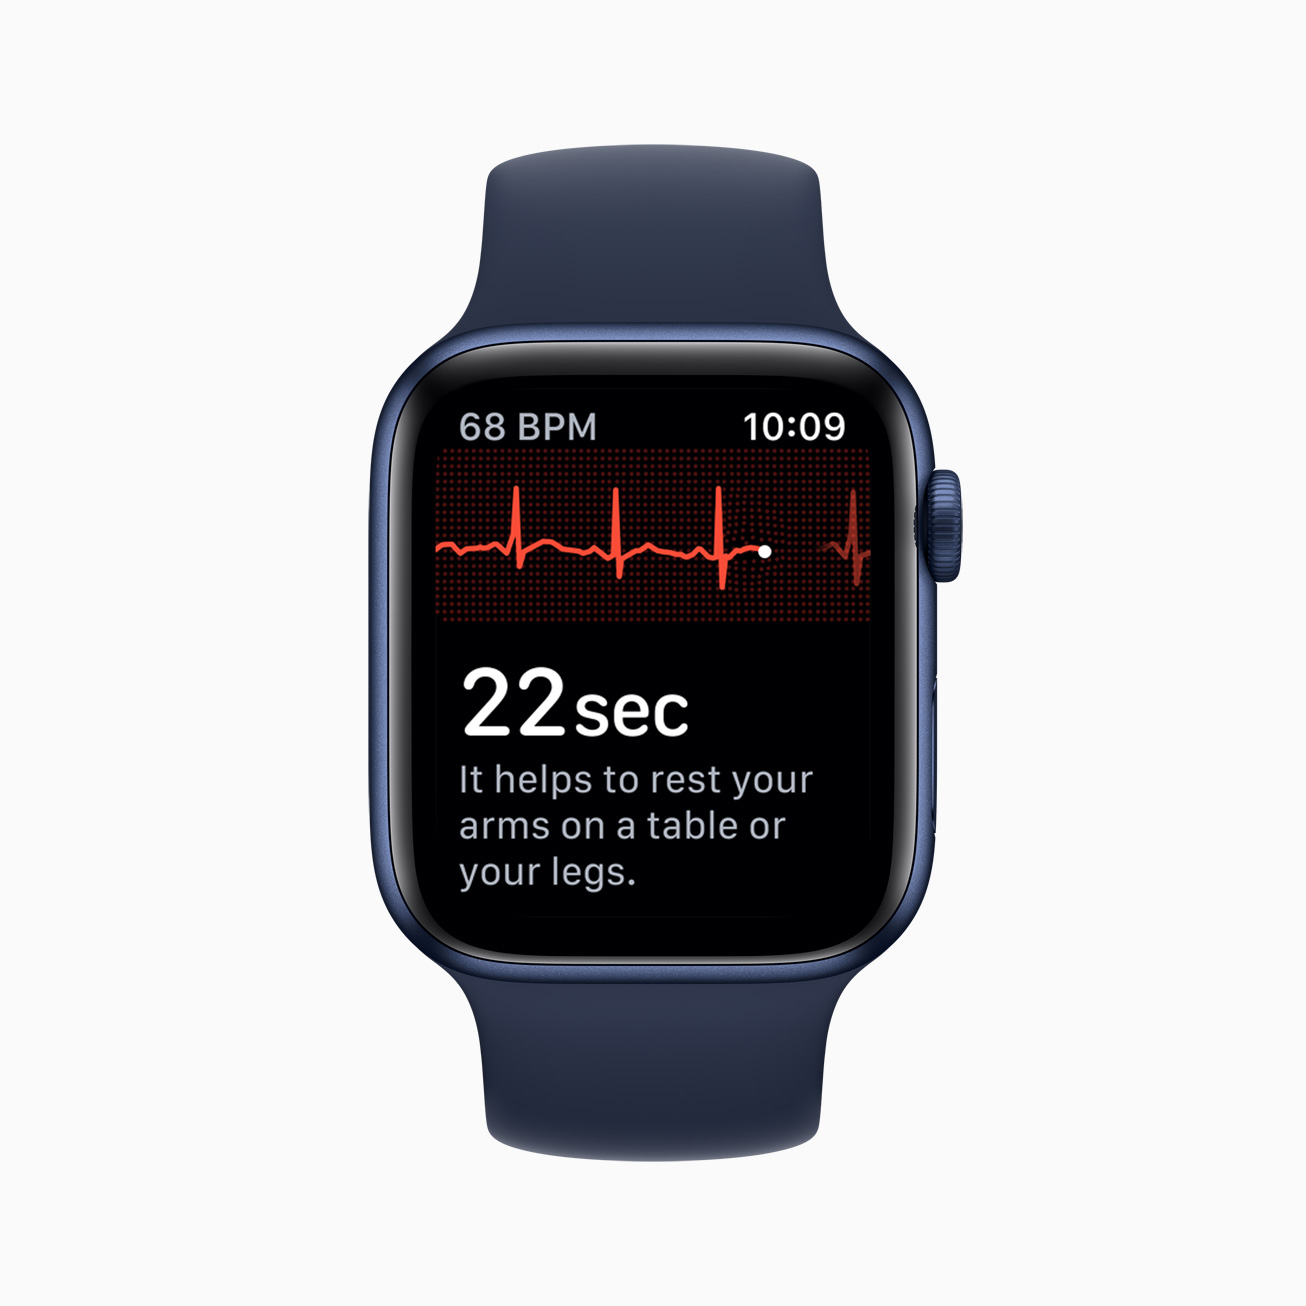 ECG app and irregular rhythm notification now available on Apple Watch